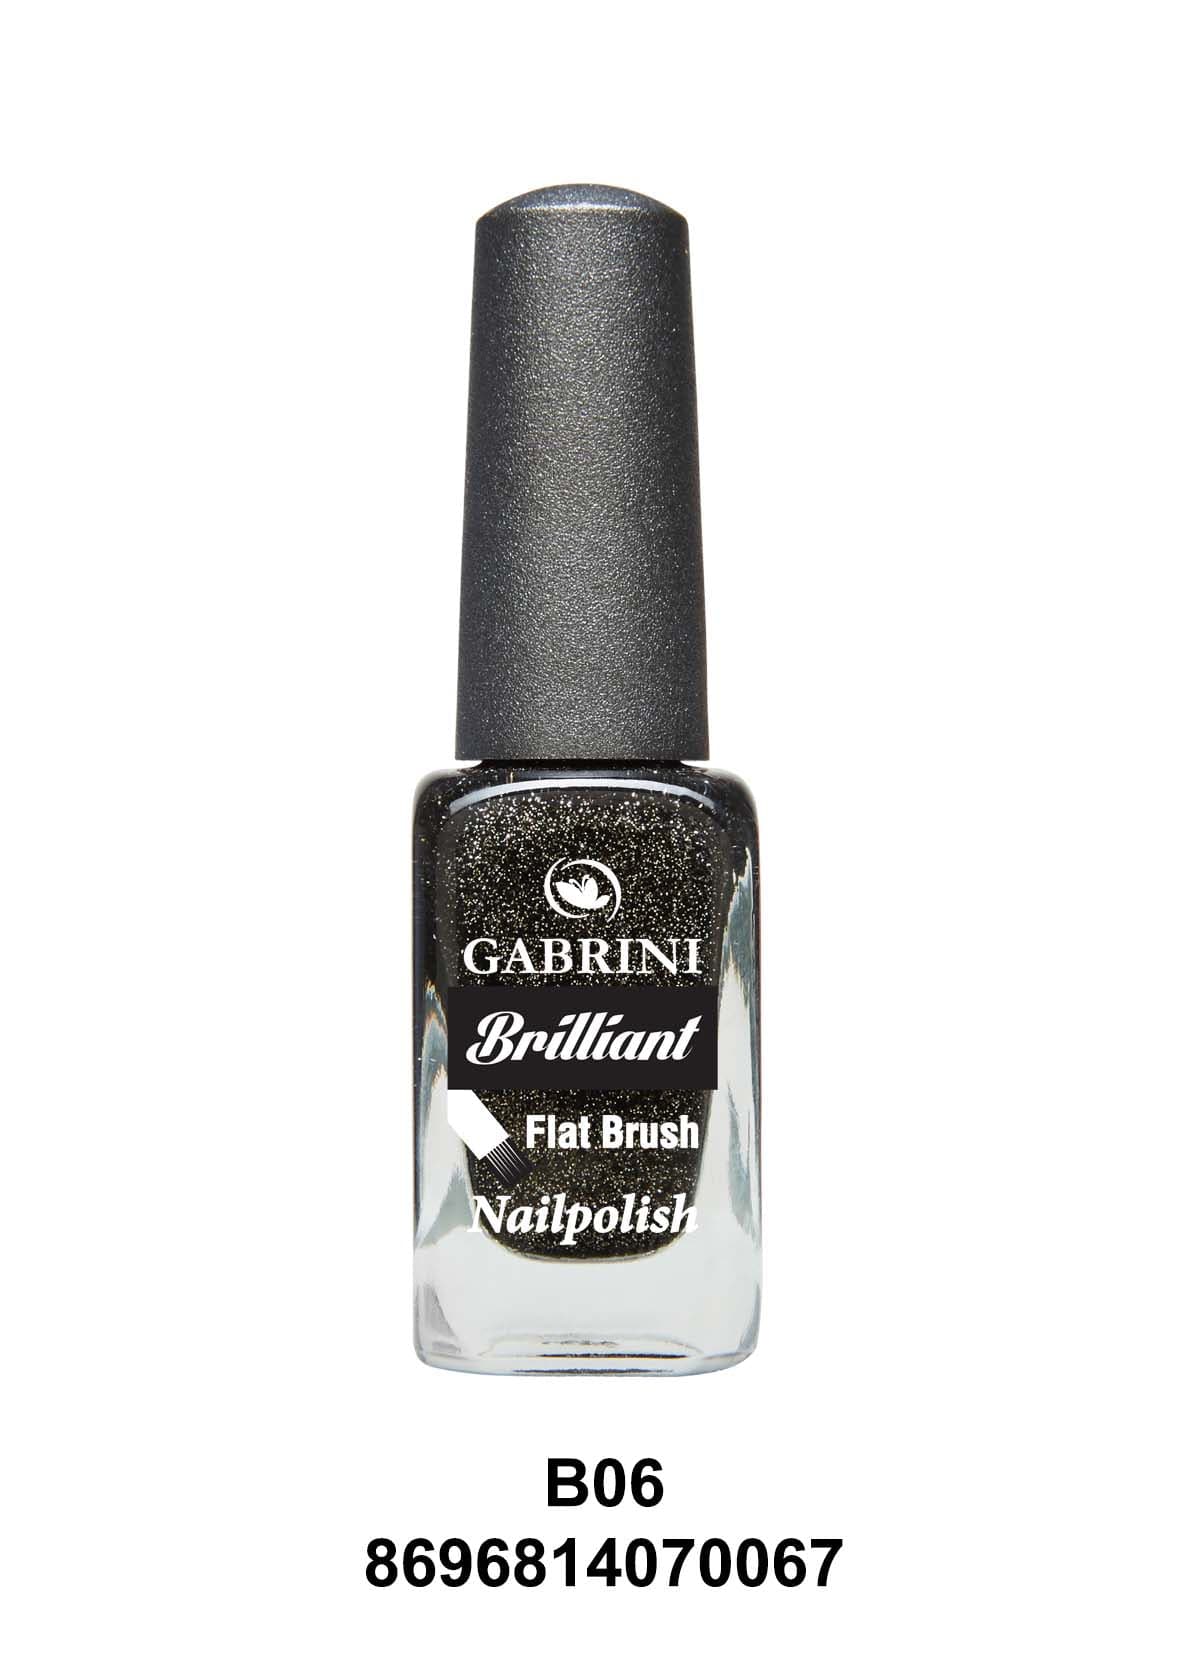 Gabrini Brilliant Nail Polish B 06 - Premium Nail Polish from Gabrini - Just Rs 475! Shop now at Cozmetica